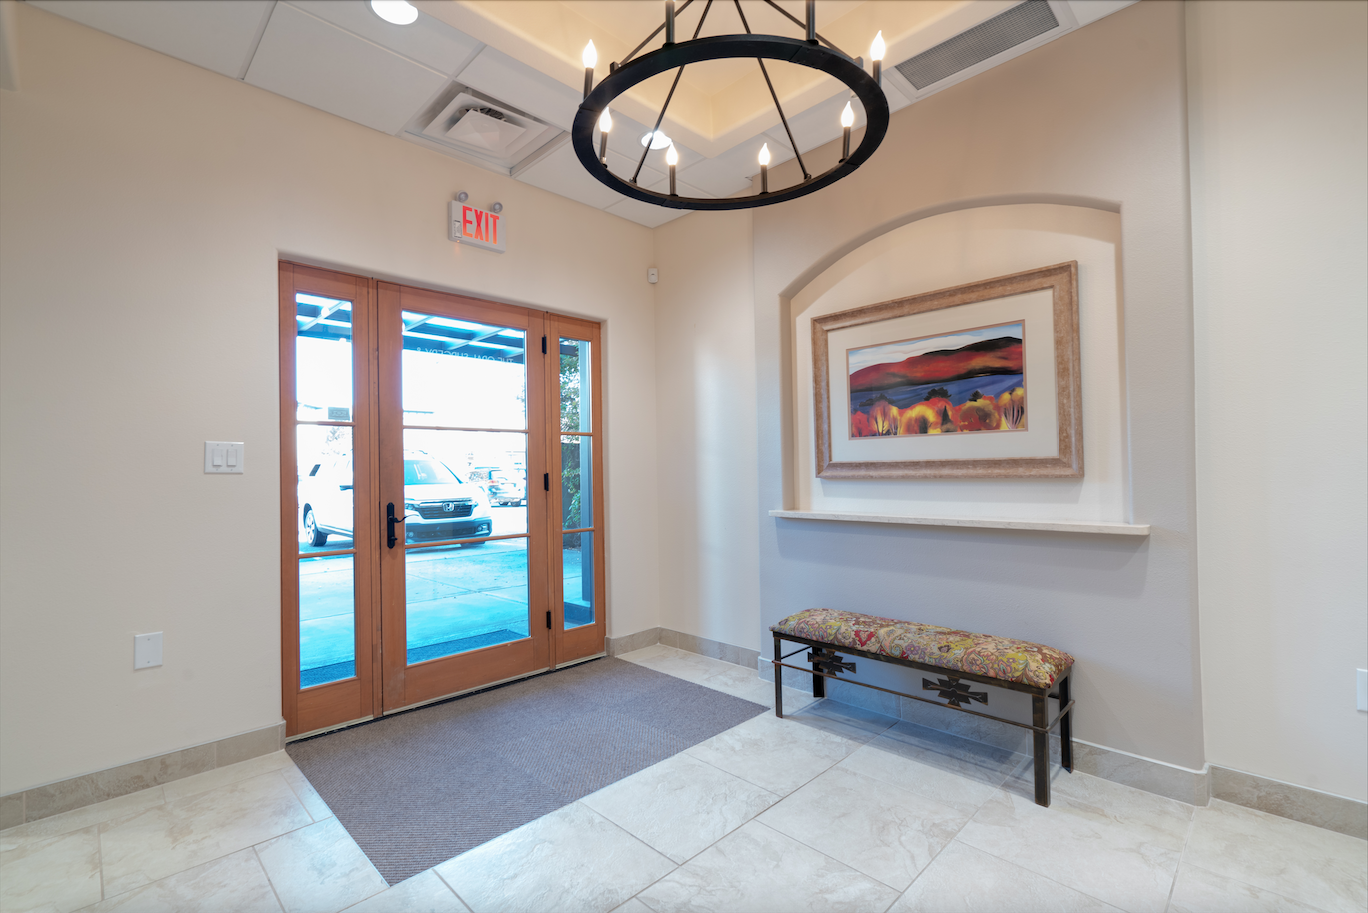 Interior of Oral Surgery and Dental Implant Center of Santa Fe |  Santa Fe, NM